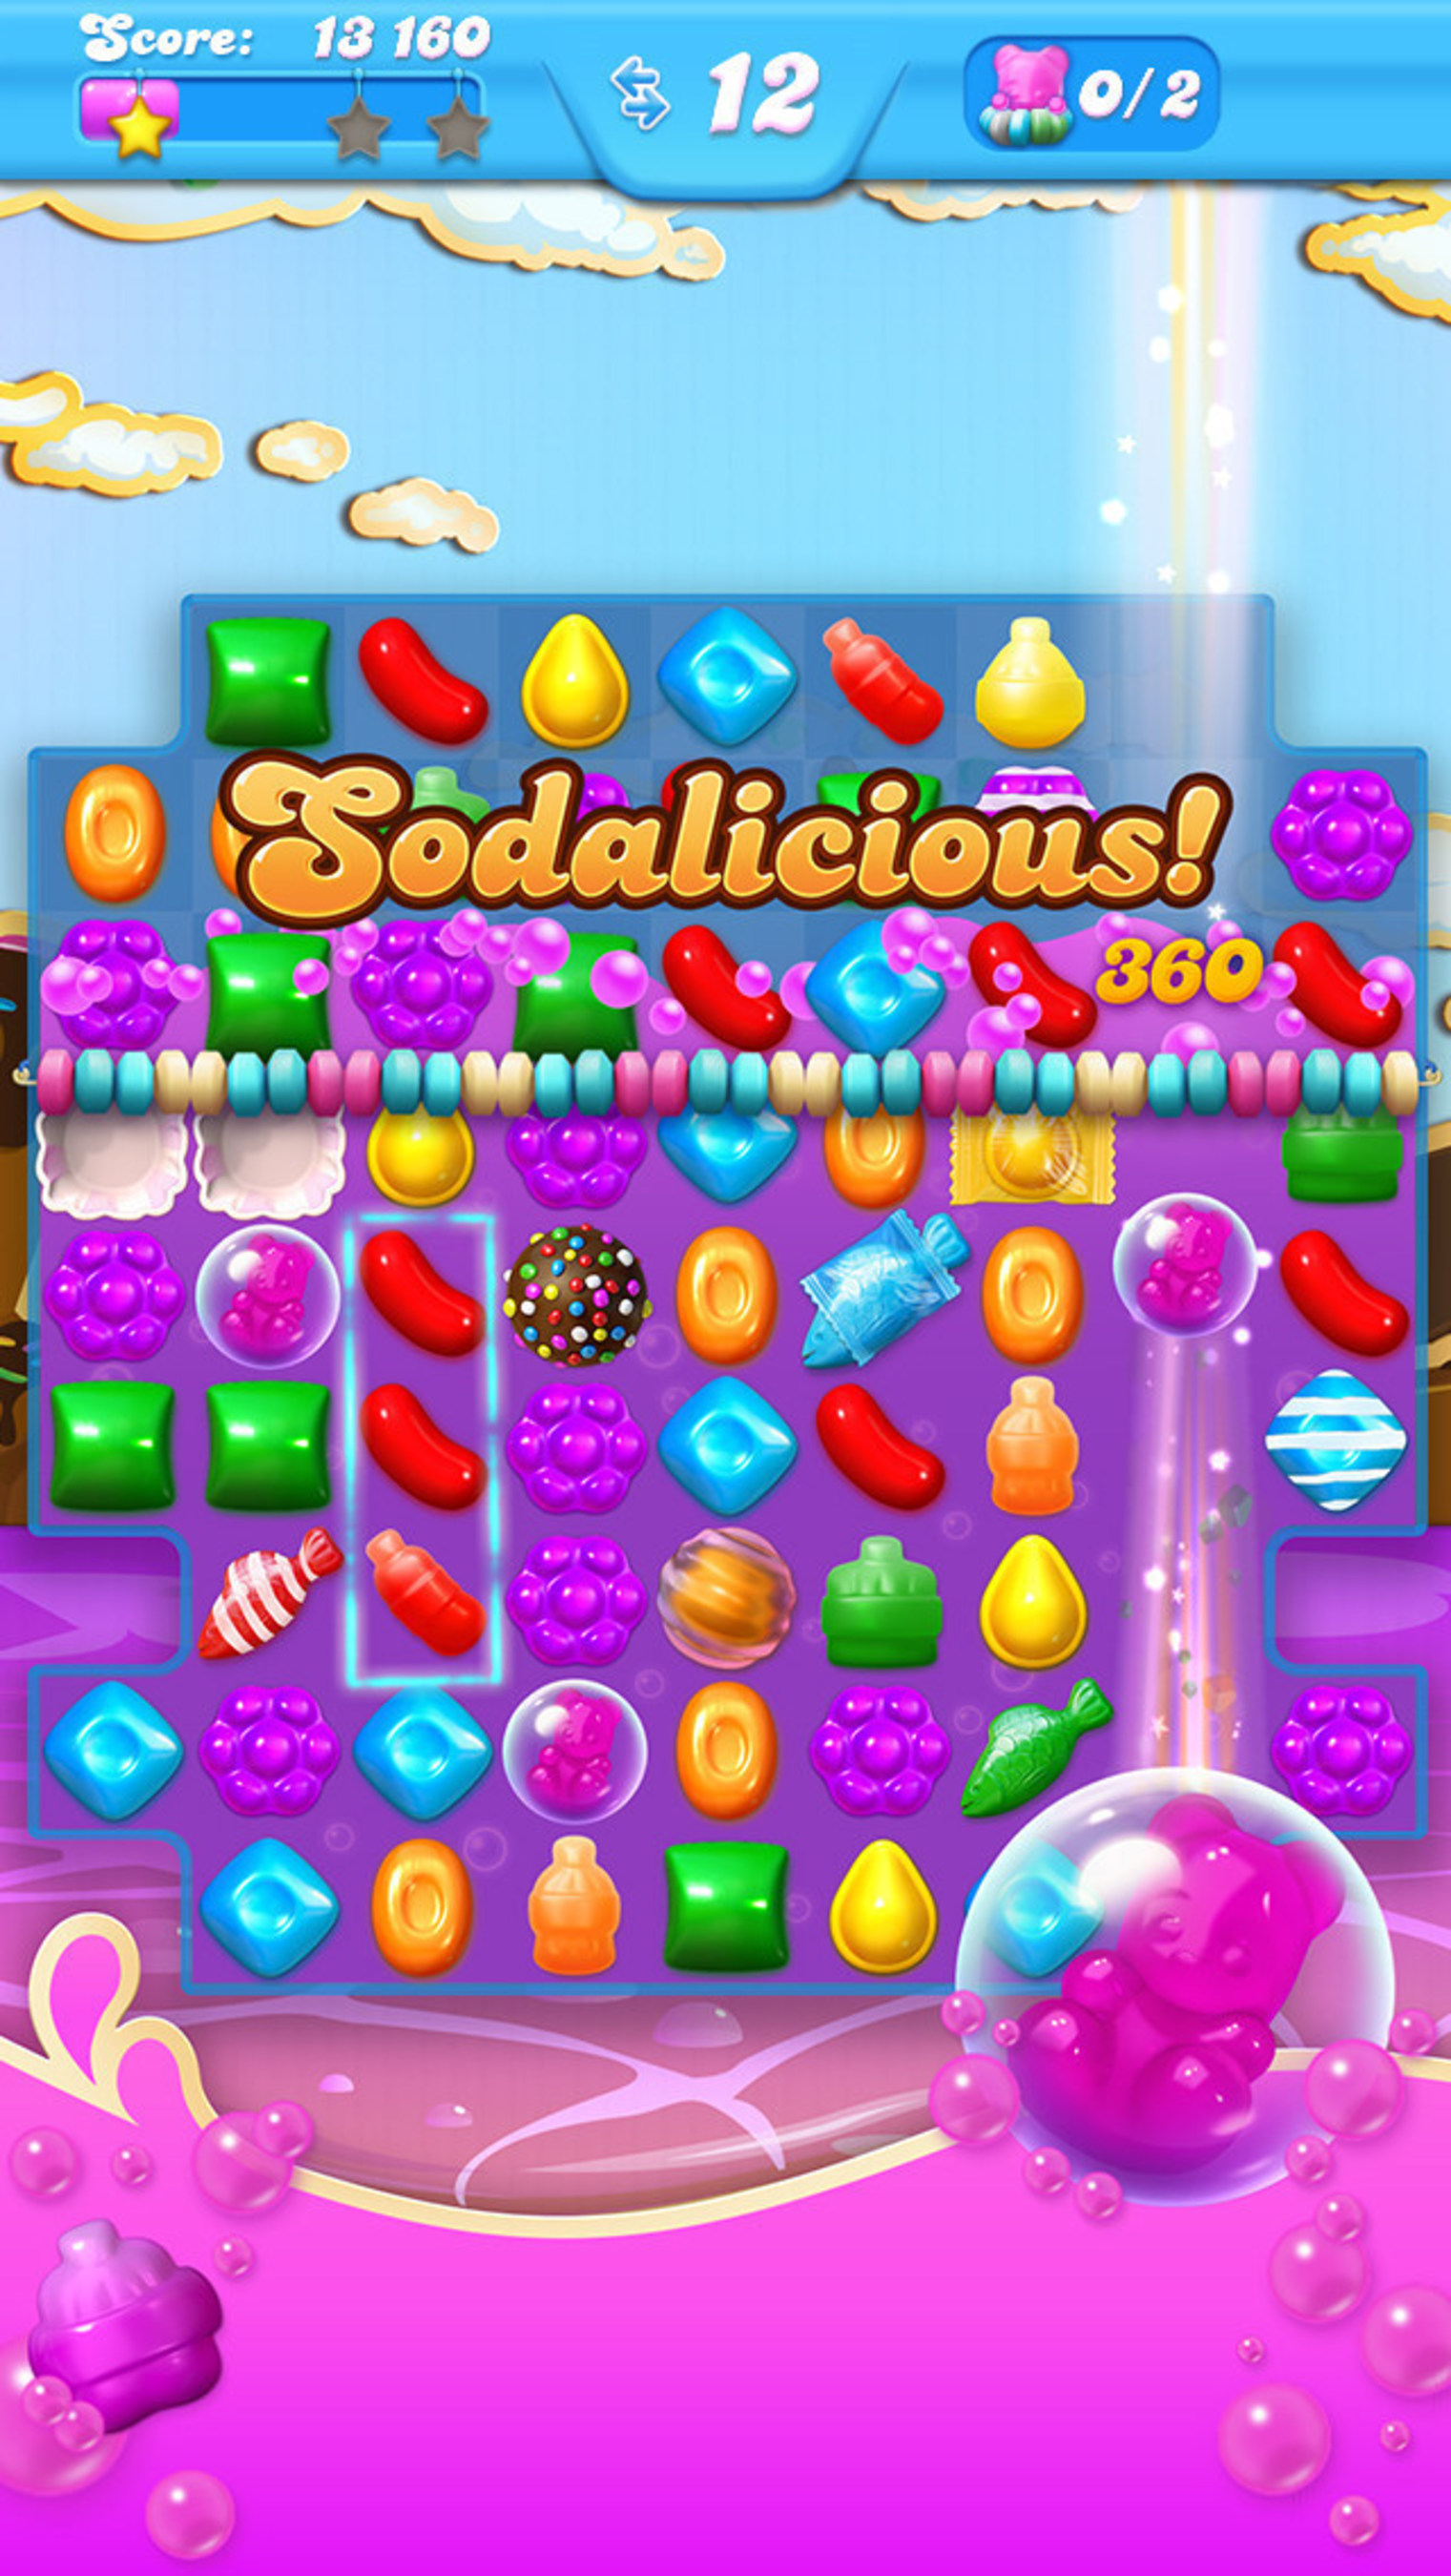 Candy Crush Soda Saga - Last chance to enjoy our sodalicious